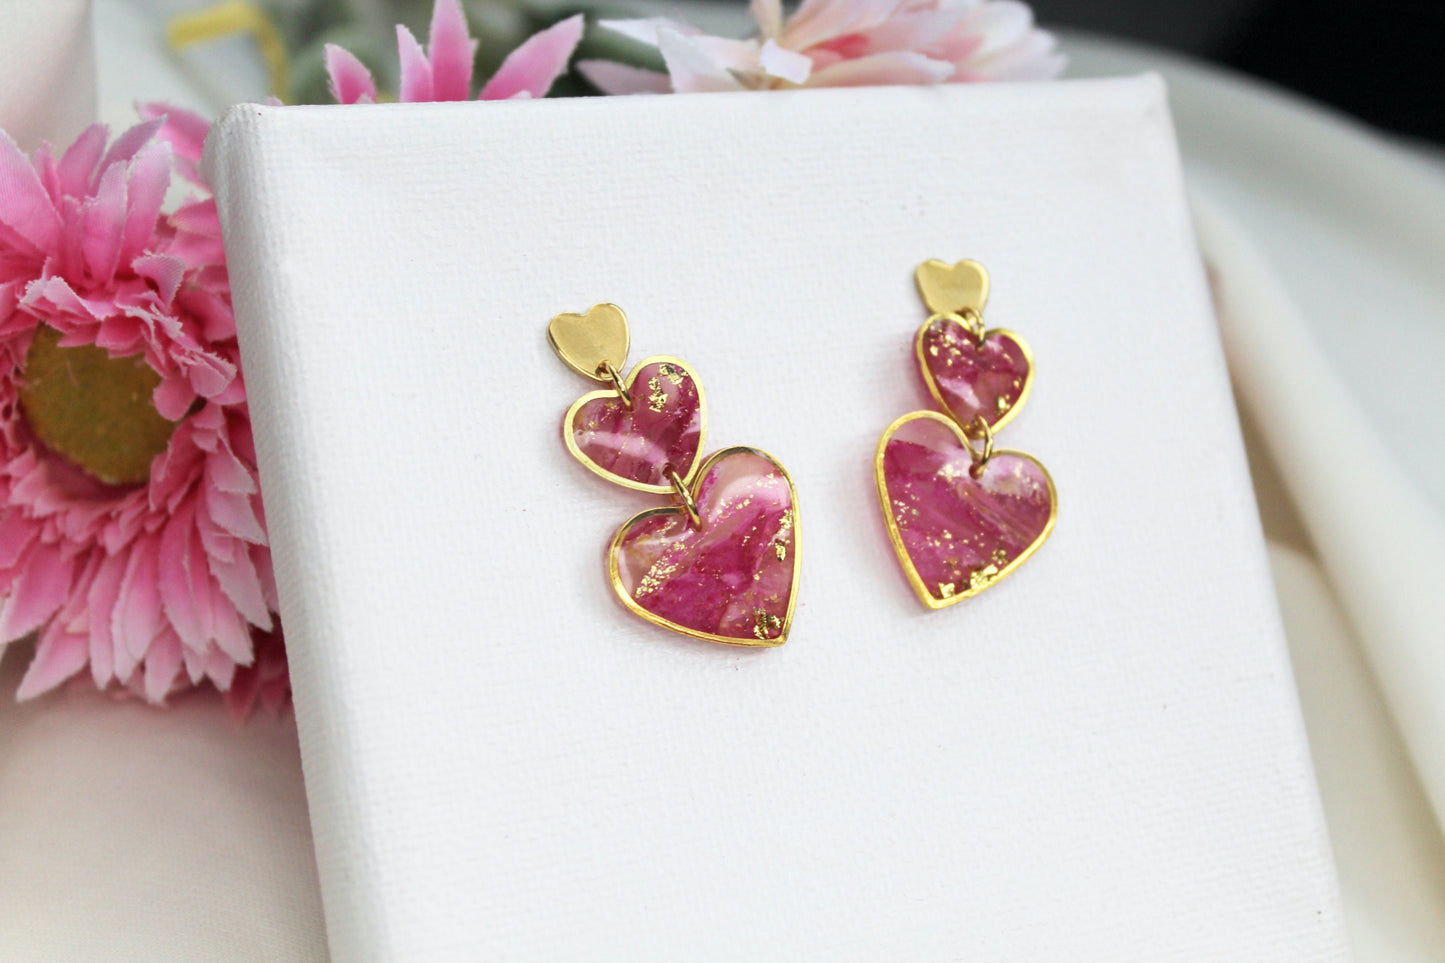 Heart Earrings, Valentine's Day Earrings, Marble Polymer Clay Earrings, Statement Earrings, Elegant Earrings, Pink Earrings, Handmade, Gift